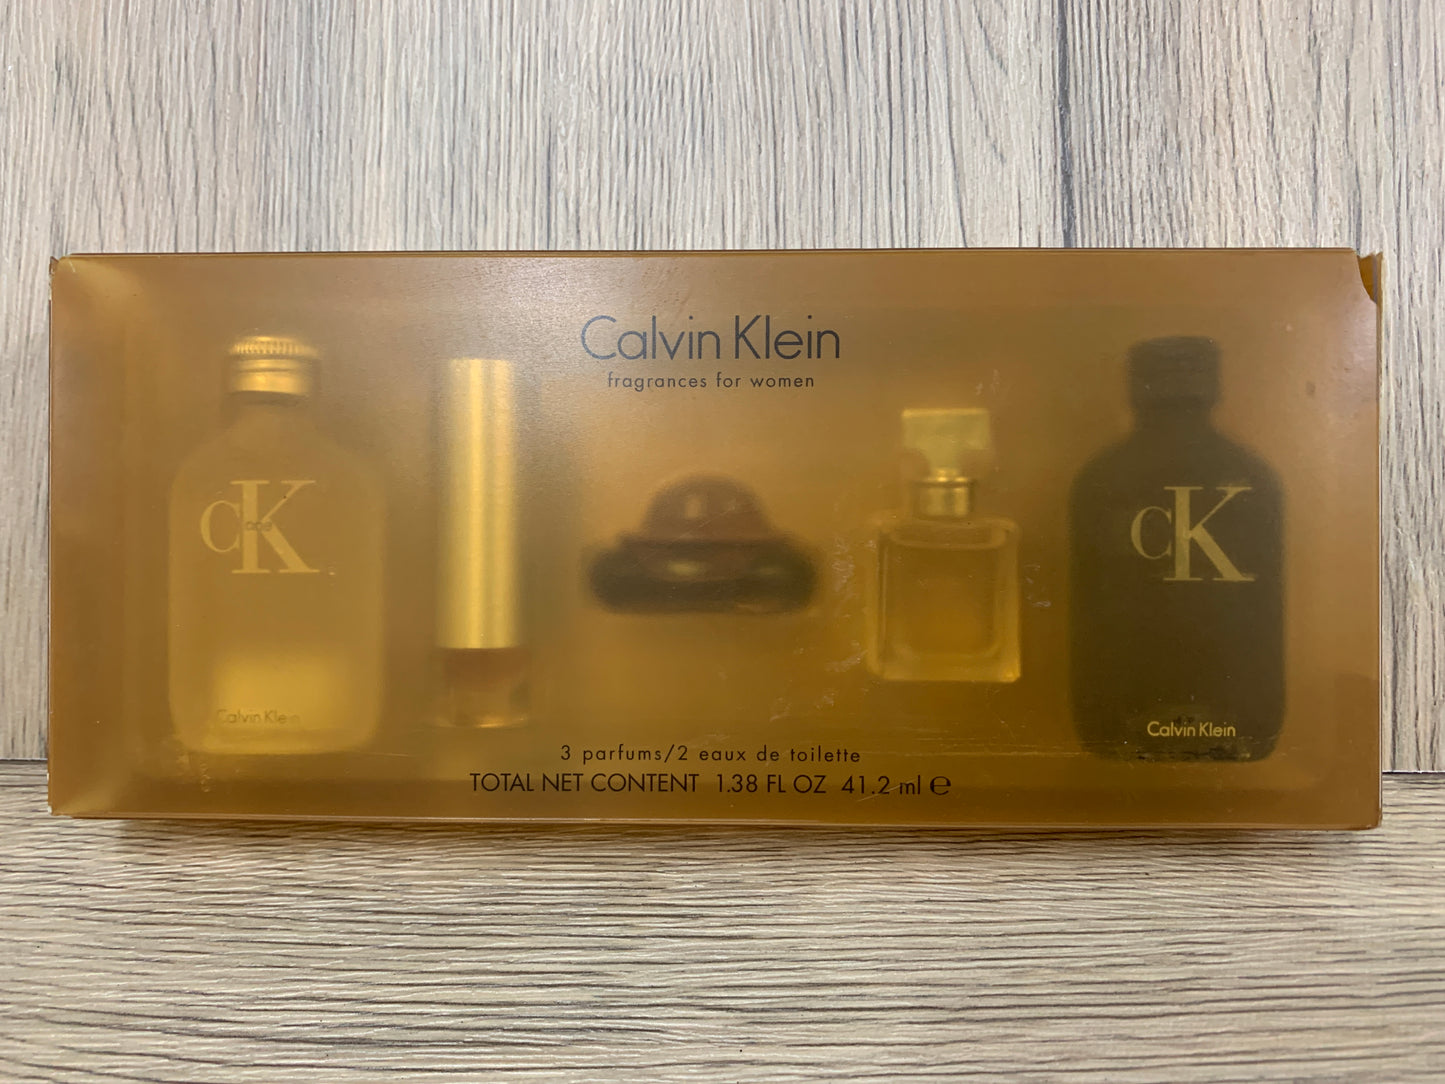 CK Calvin Klein 3 parfums 1.38 oz 41.2ml set fragrances edt perfume - 17MAYck,calvin klein,parfum,perfume,edt